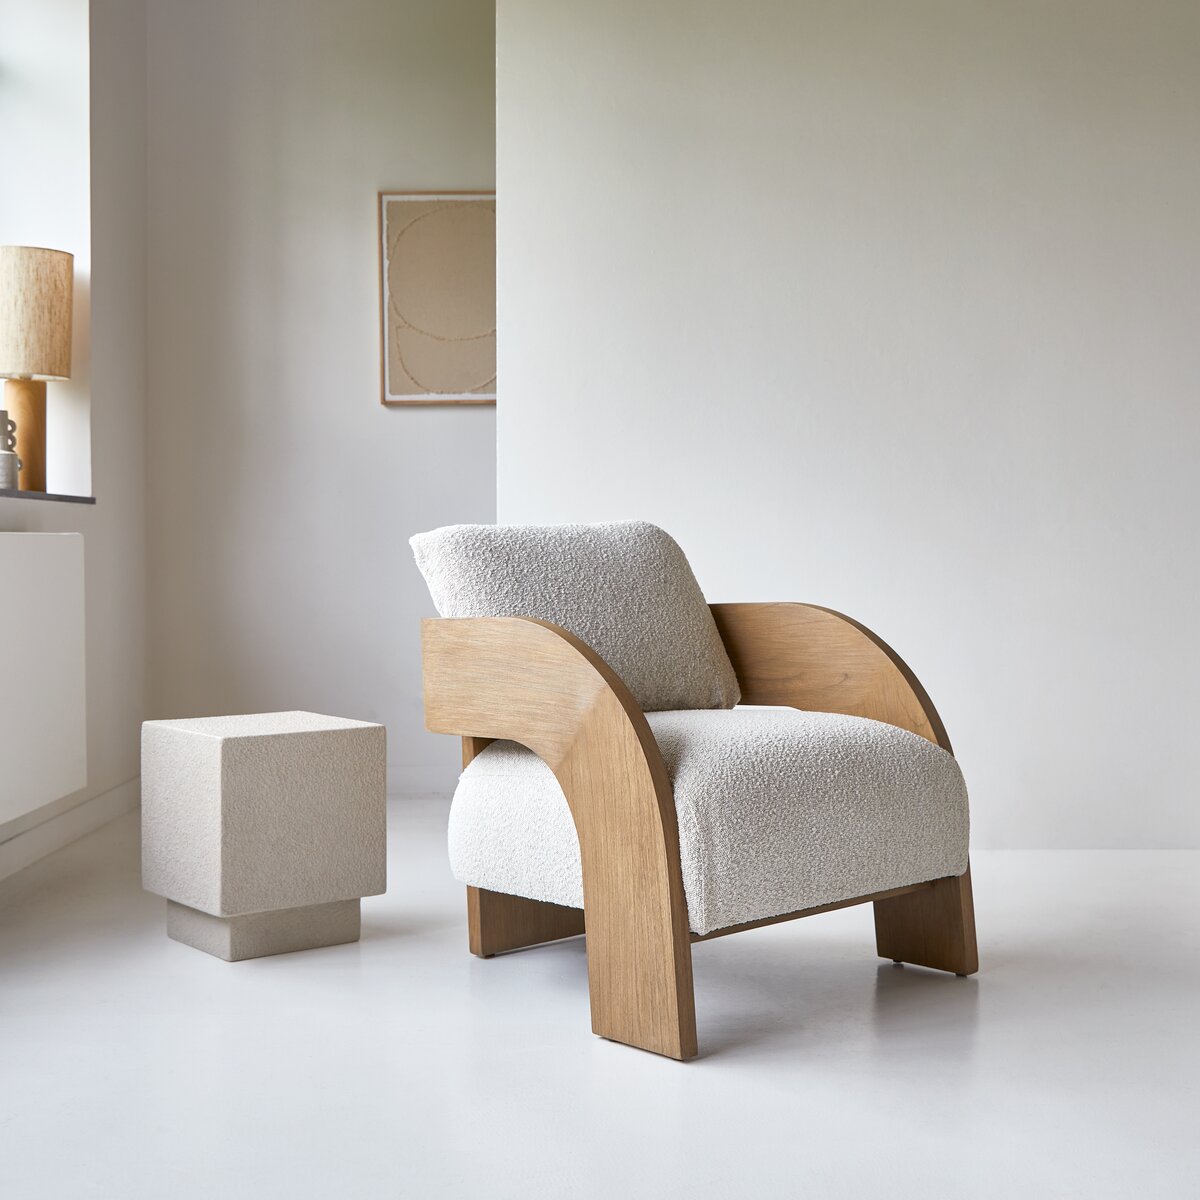 Boti - Sessel aus massivem Mindiholz und ecrufarbenem Stoff